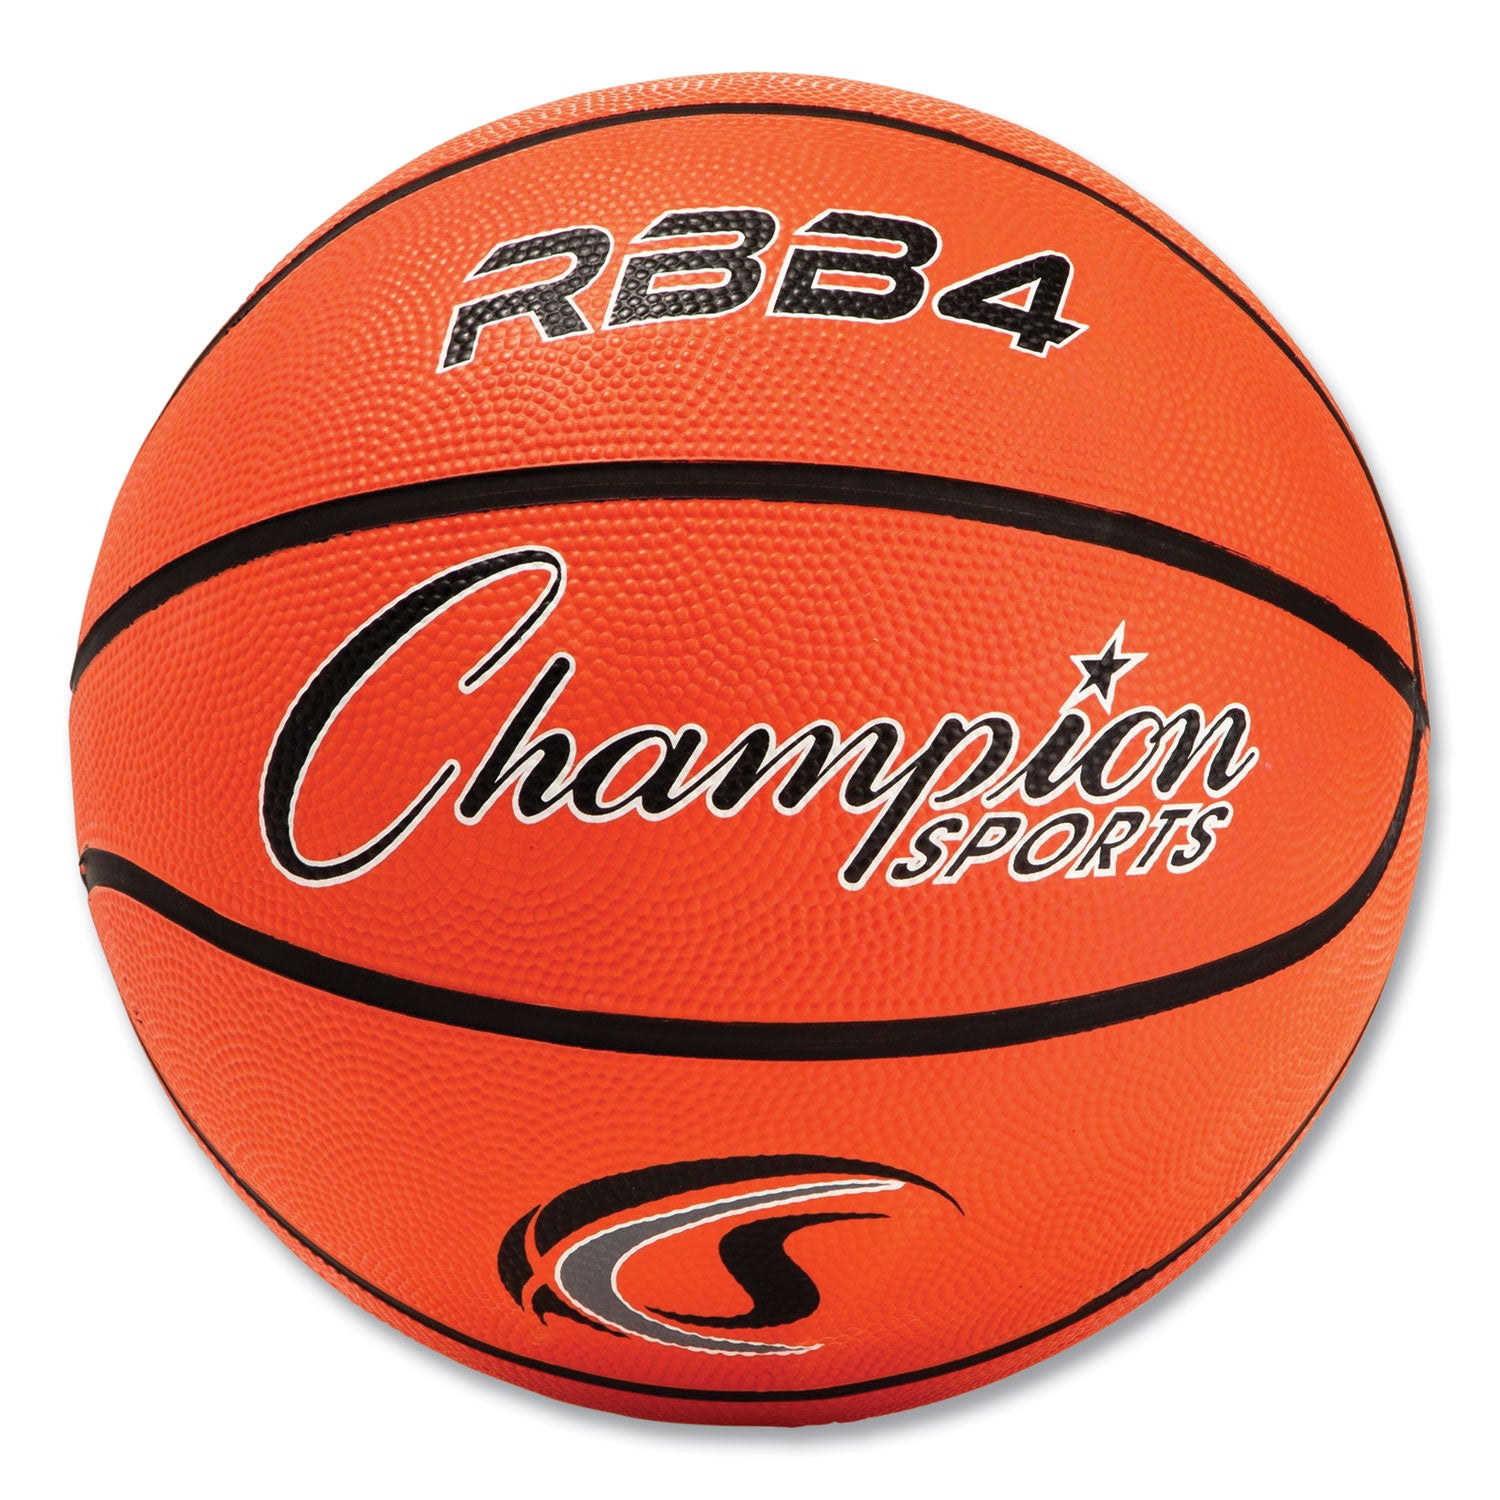 Rubber Sports Ball, For Basketball, No. 6, Intermediate Size, Orange - 